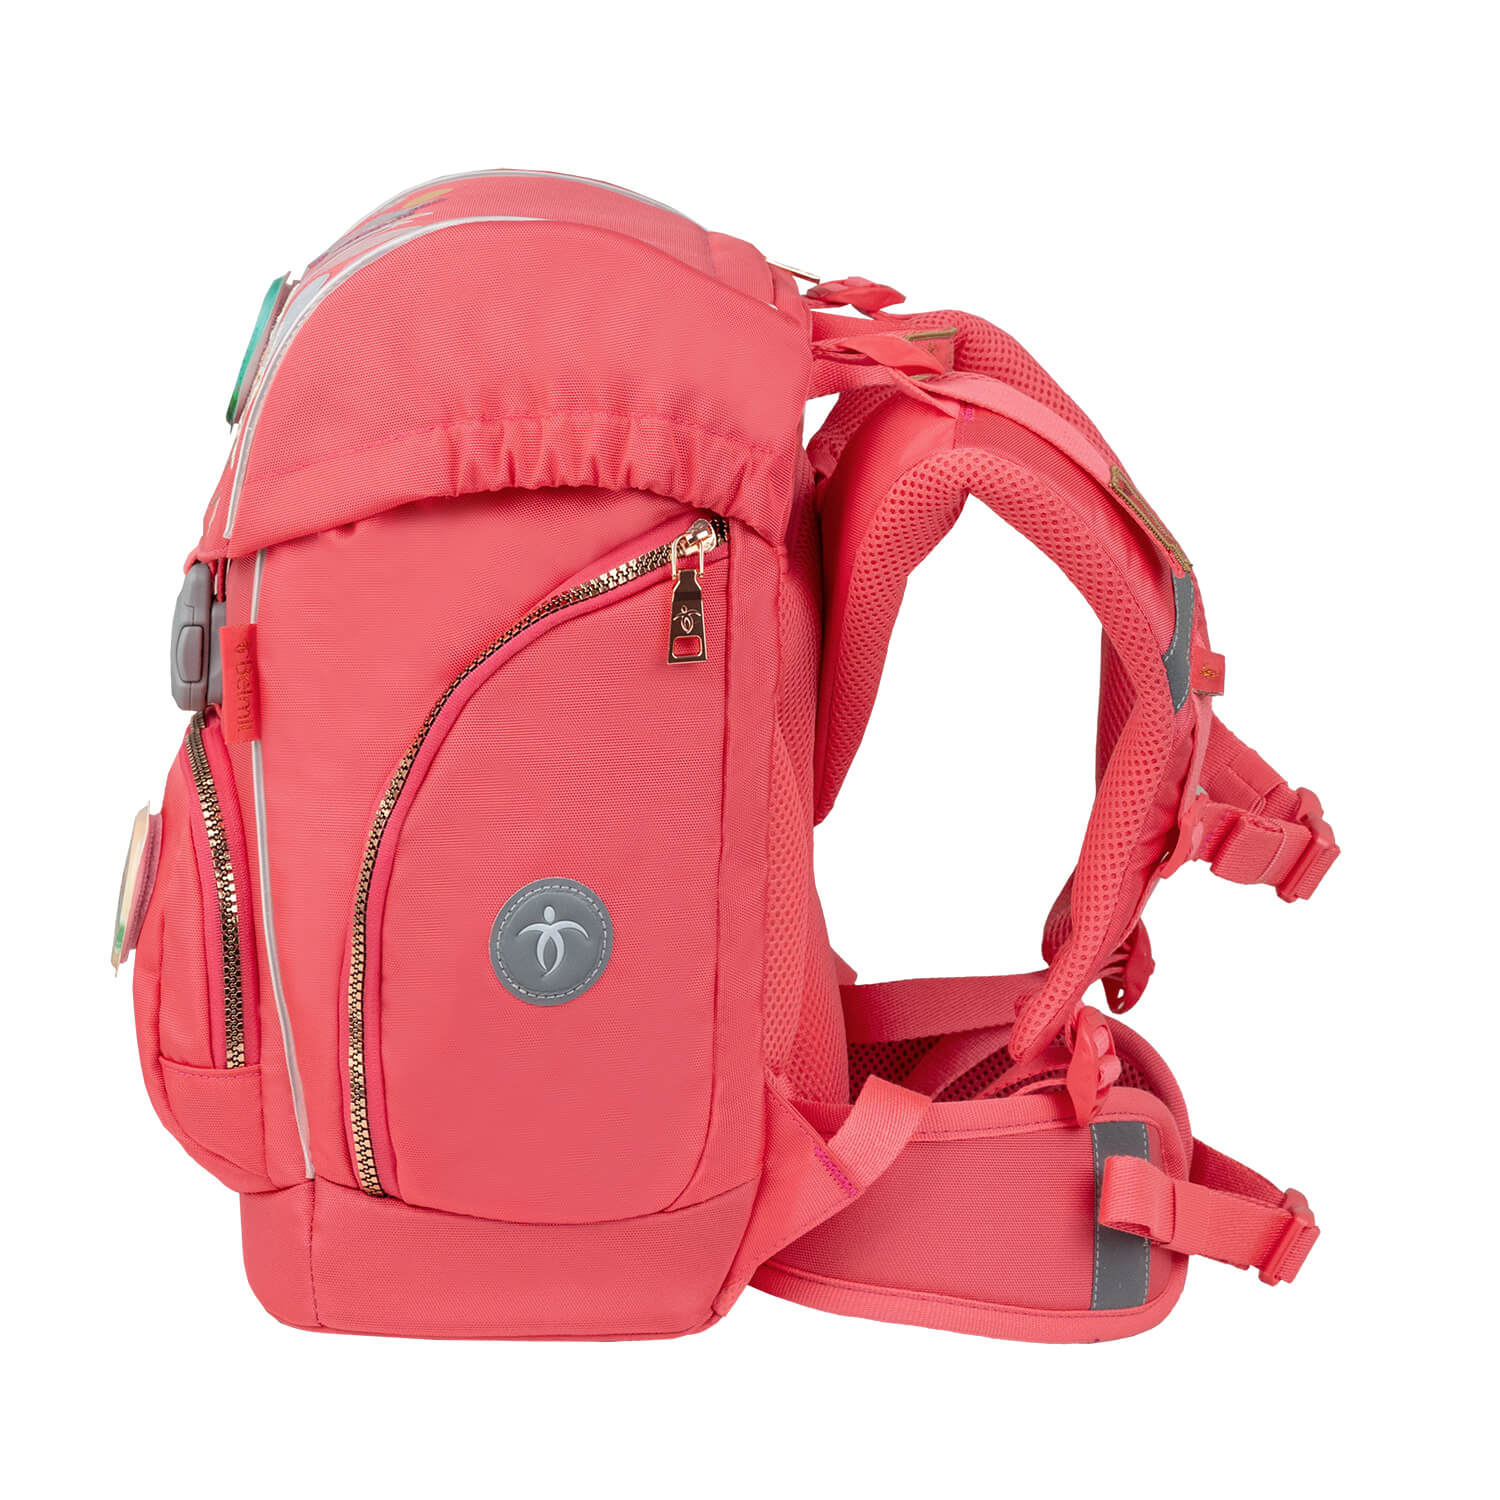 Premium Comfy Plus Rose Quartz Schoolbag set 5pcs.